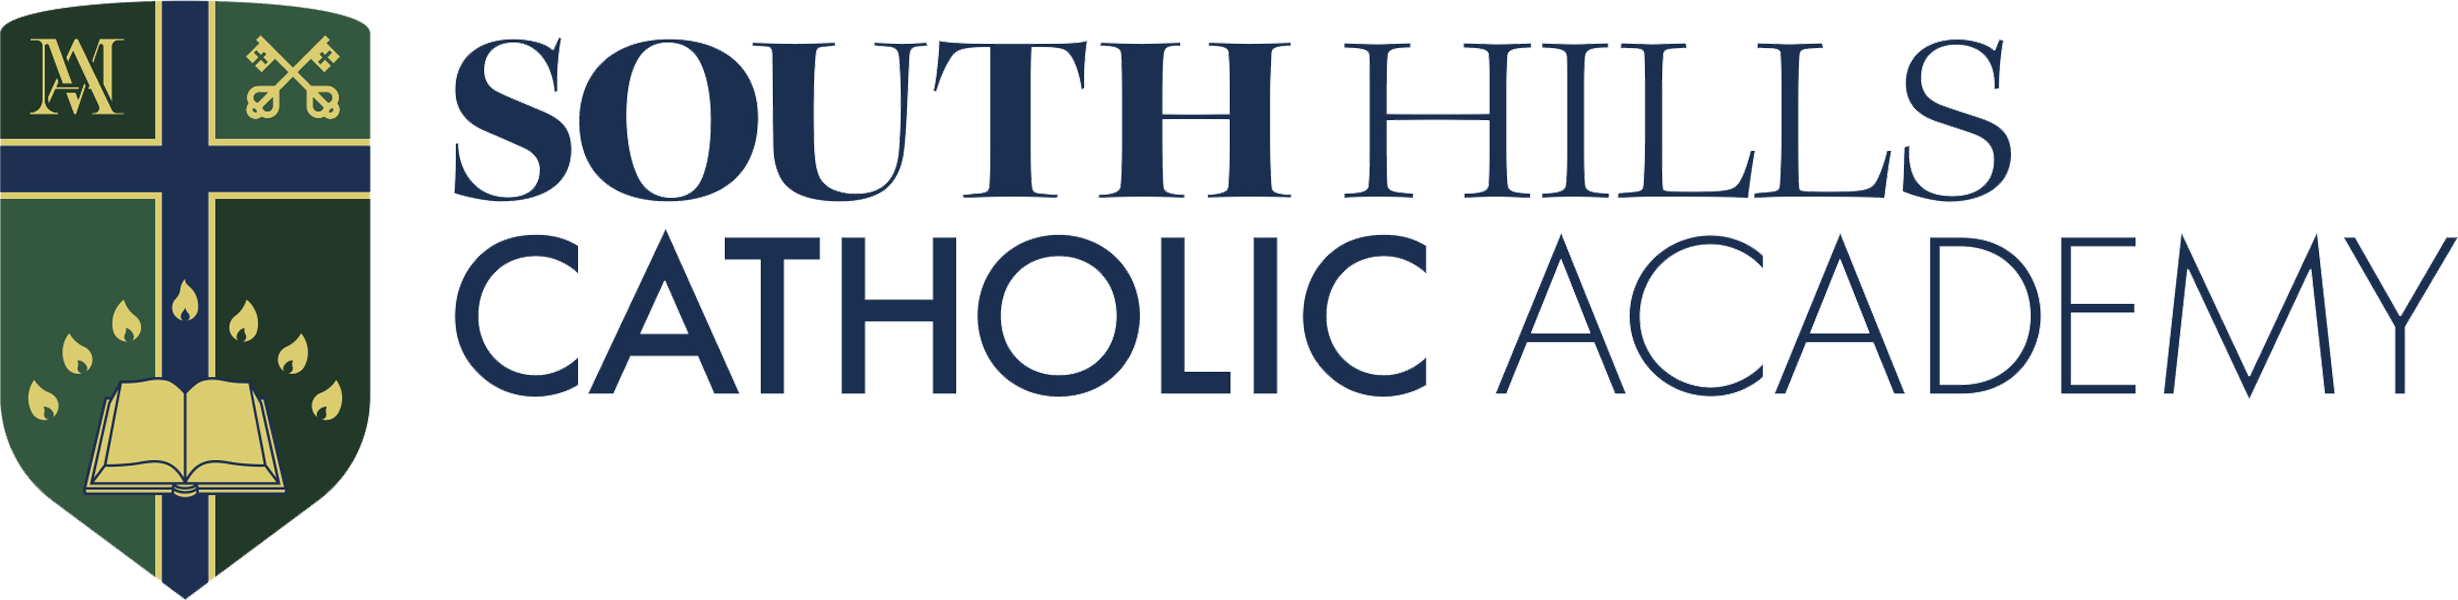 South Hills Catholic Academy Names Curriculum Director